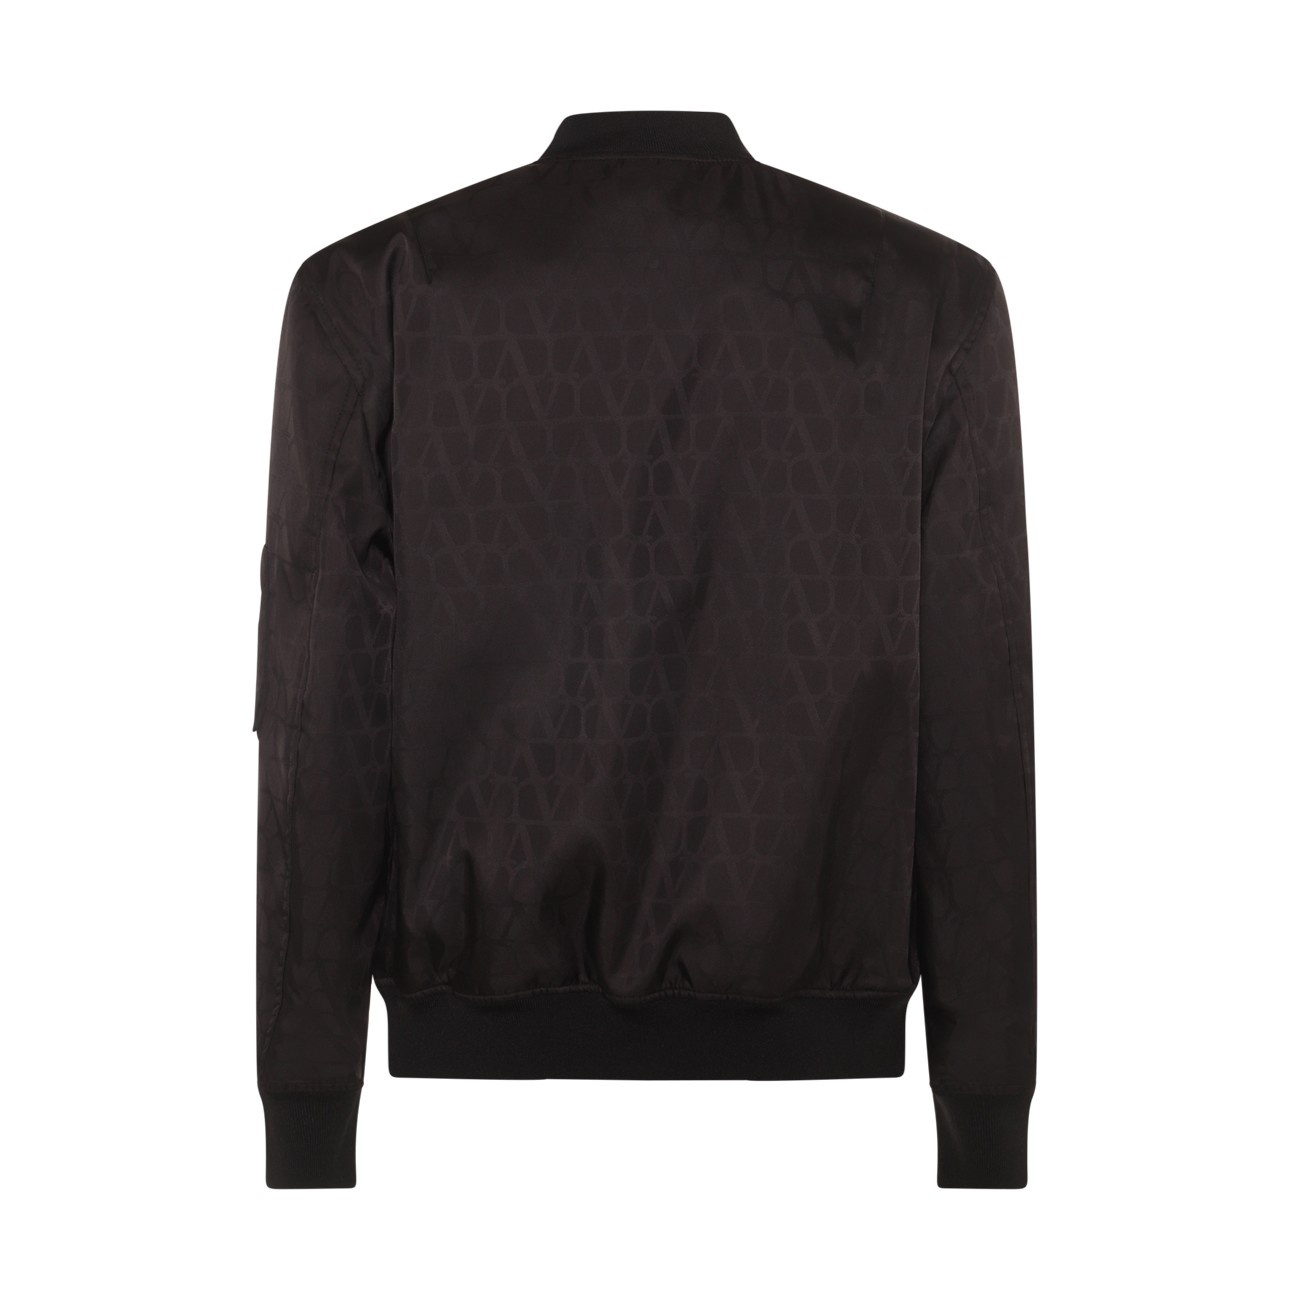 black casual jacket - 2